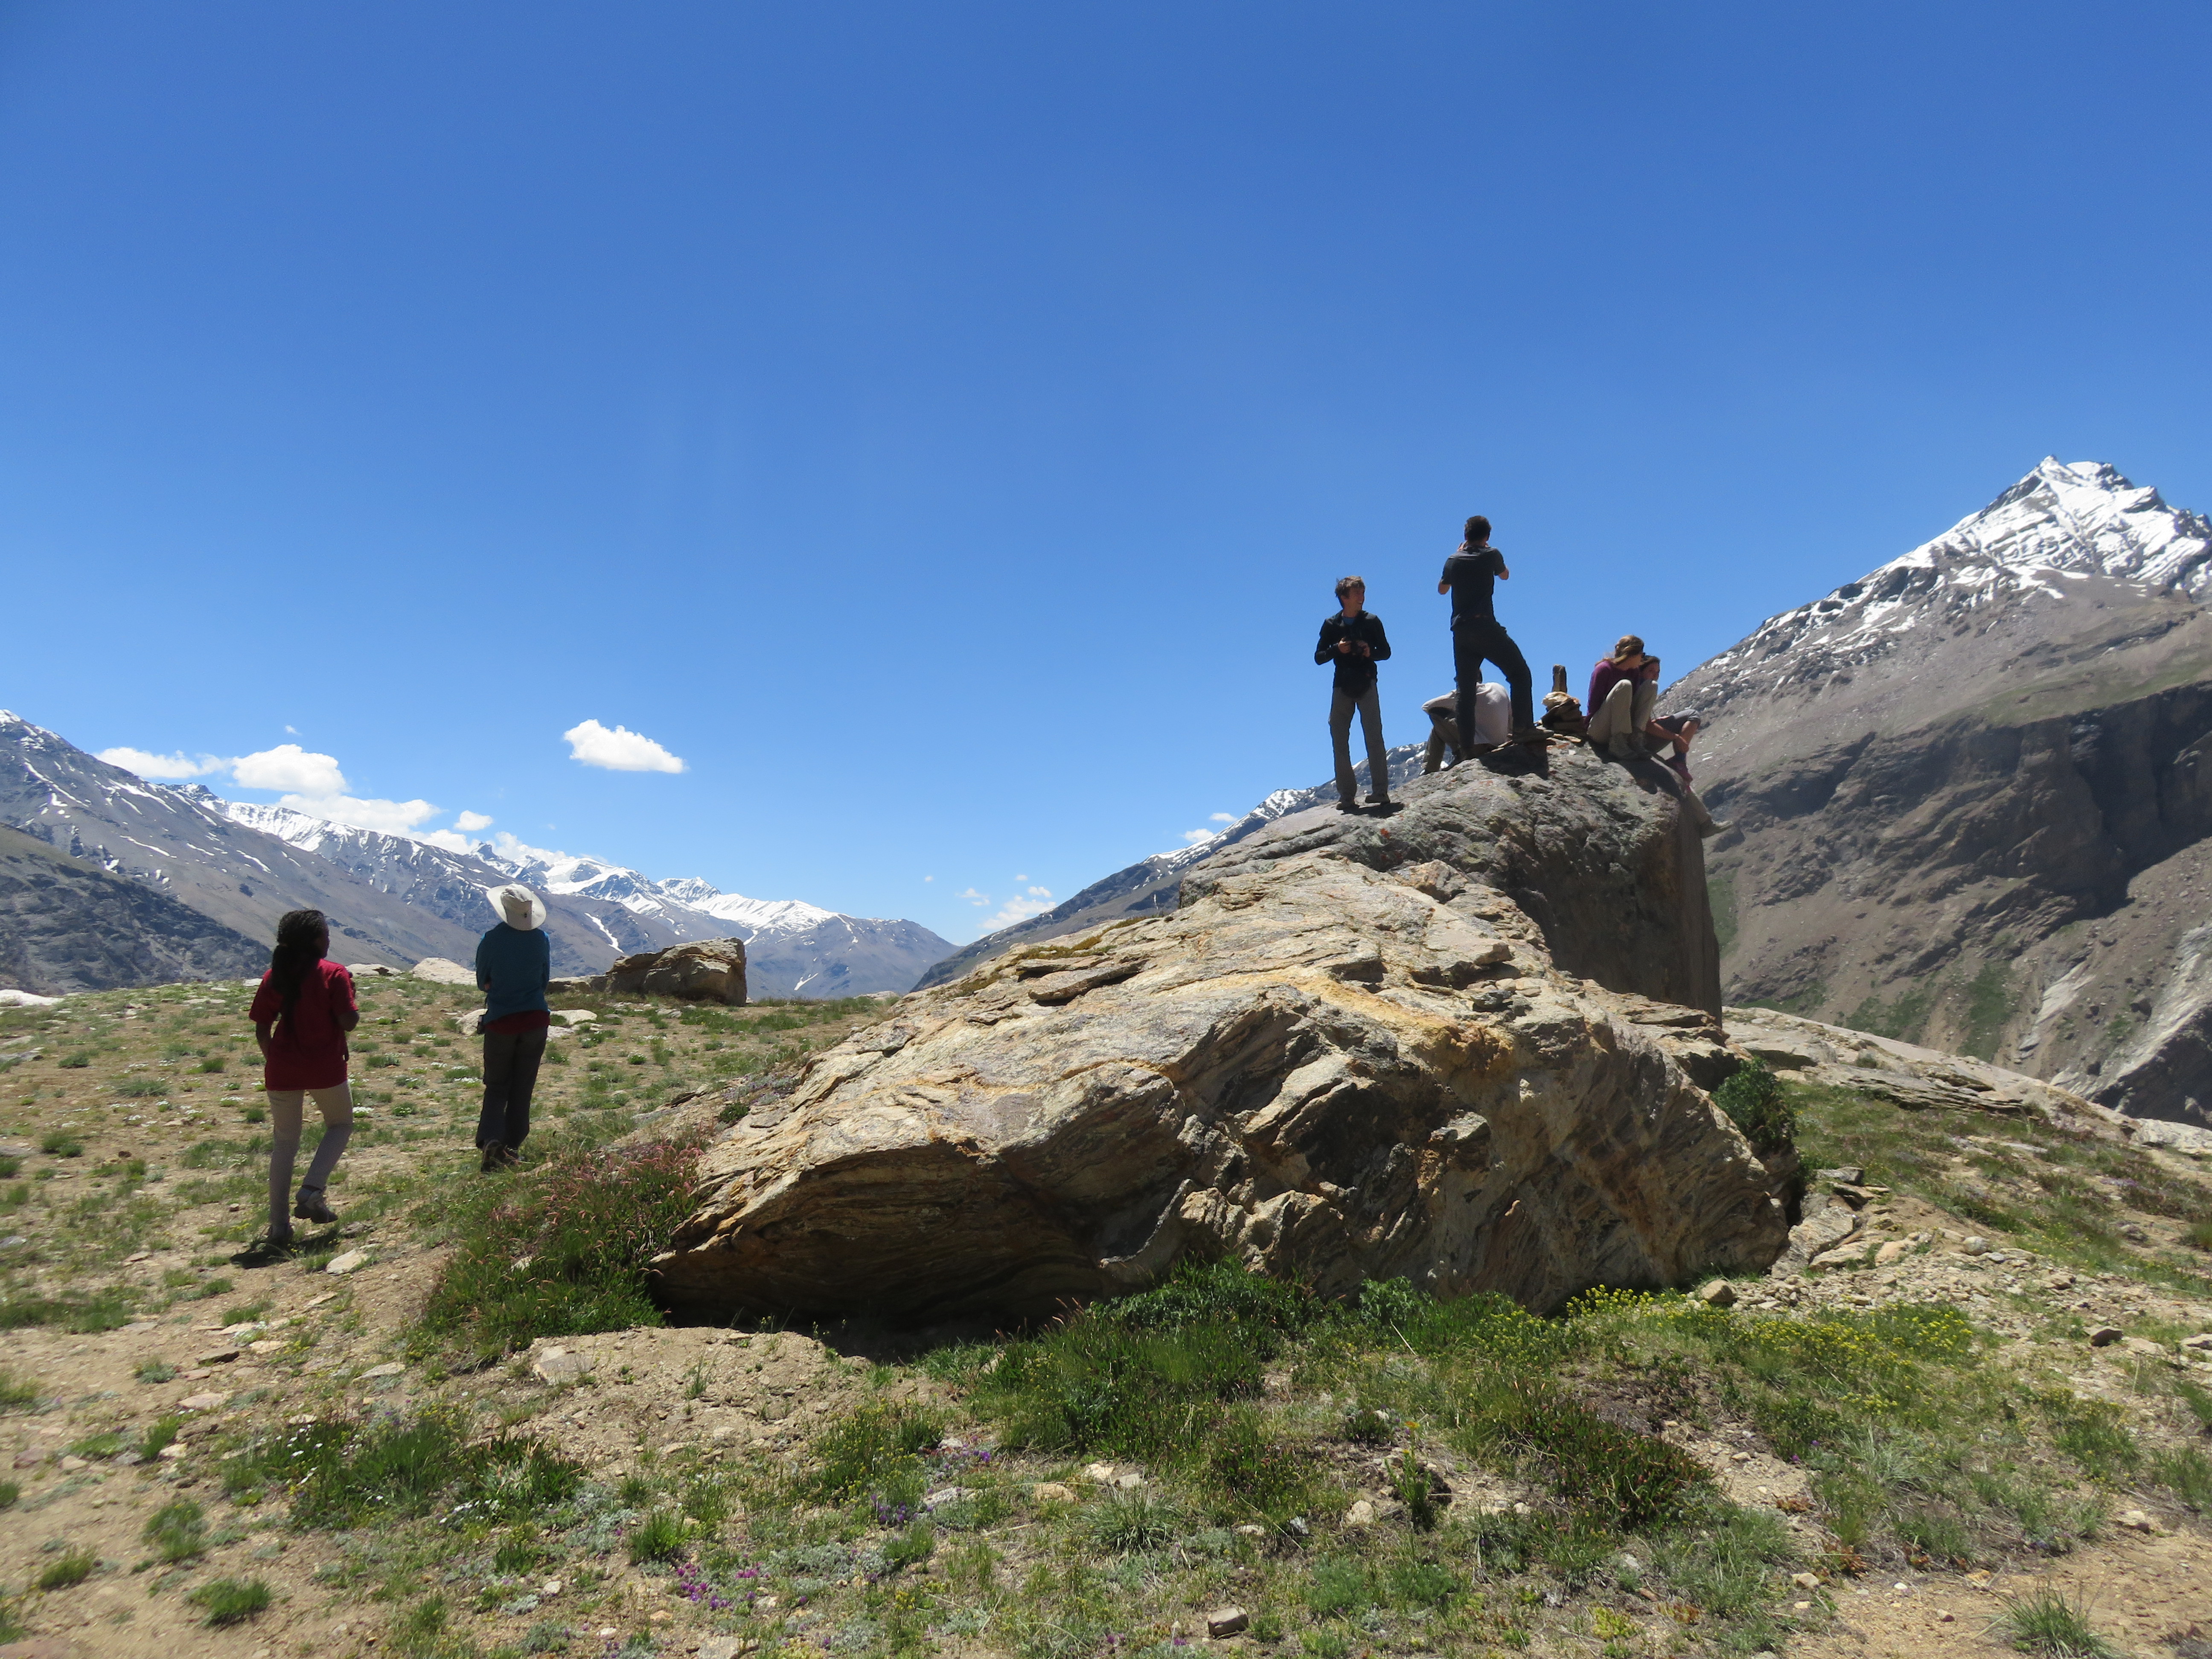 Zanskar 2016 - 6 - Chemins et découverte